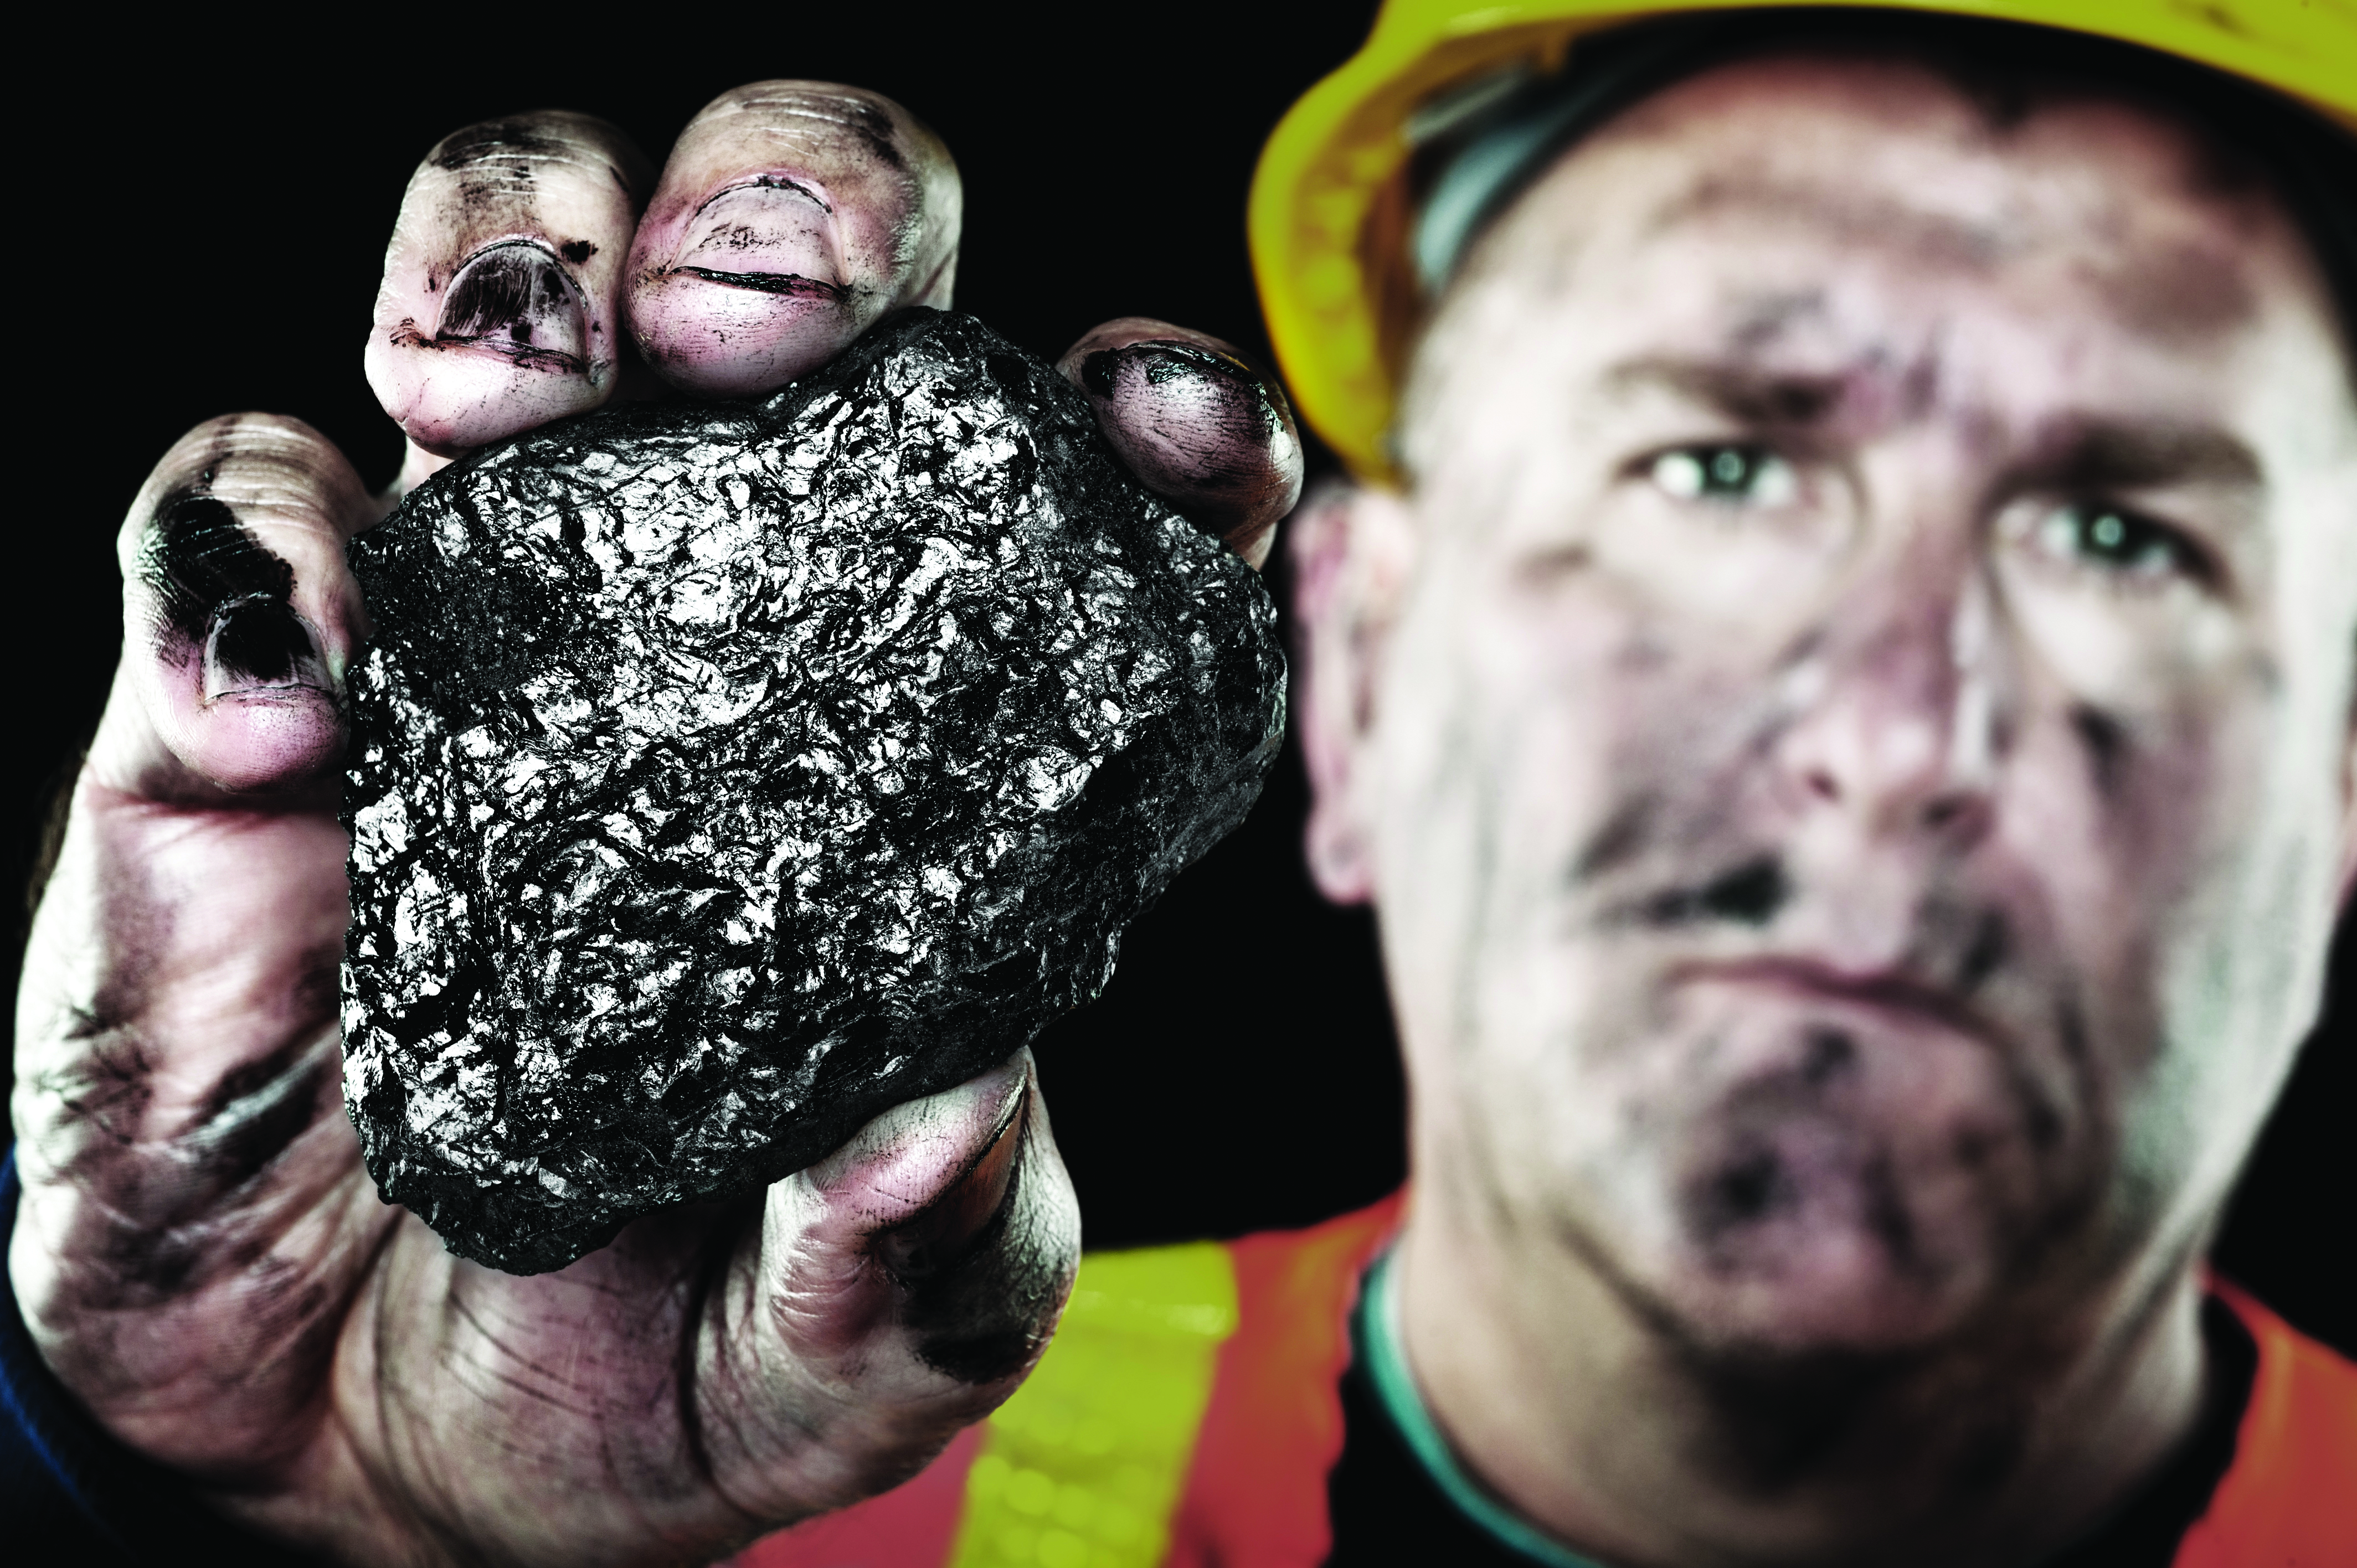 tw0122_miner-with-coal.jpg